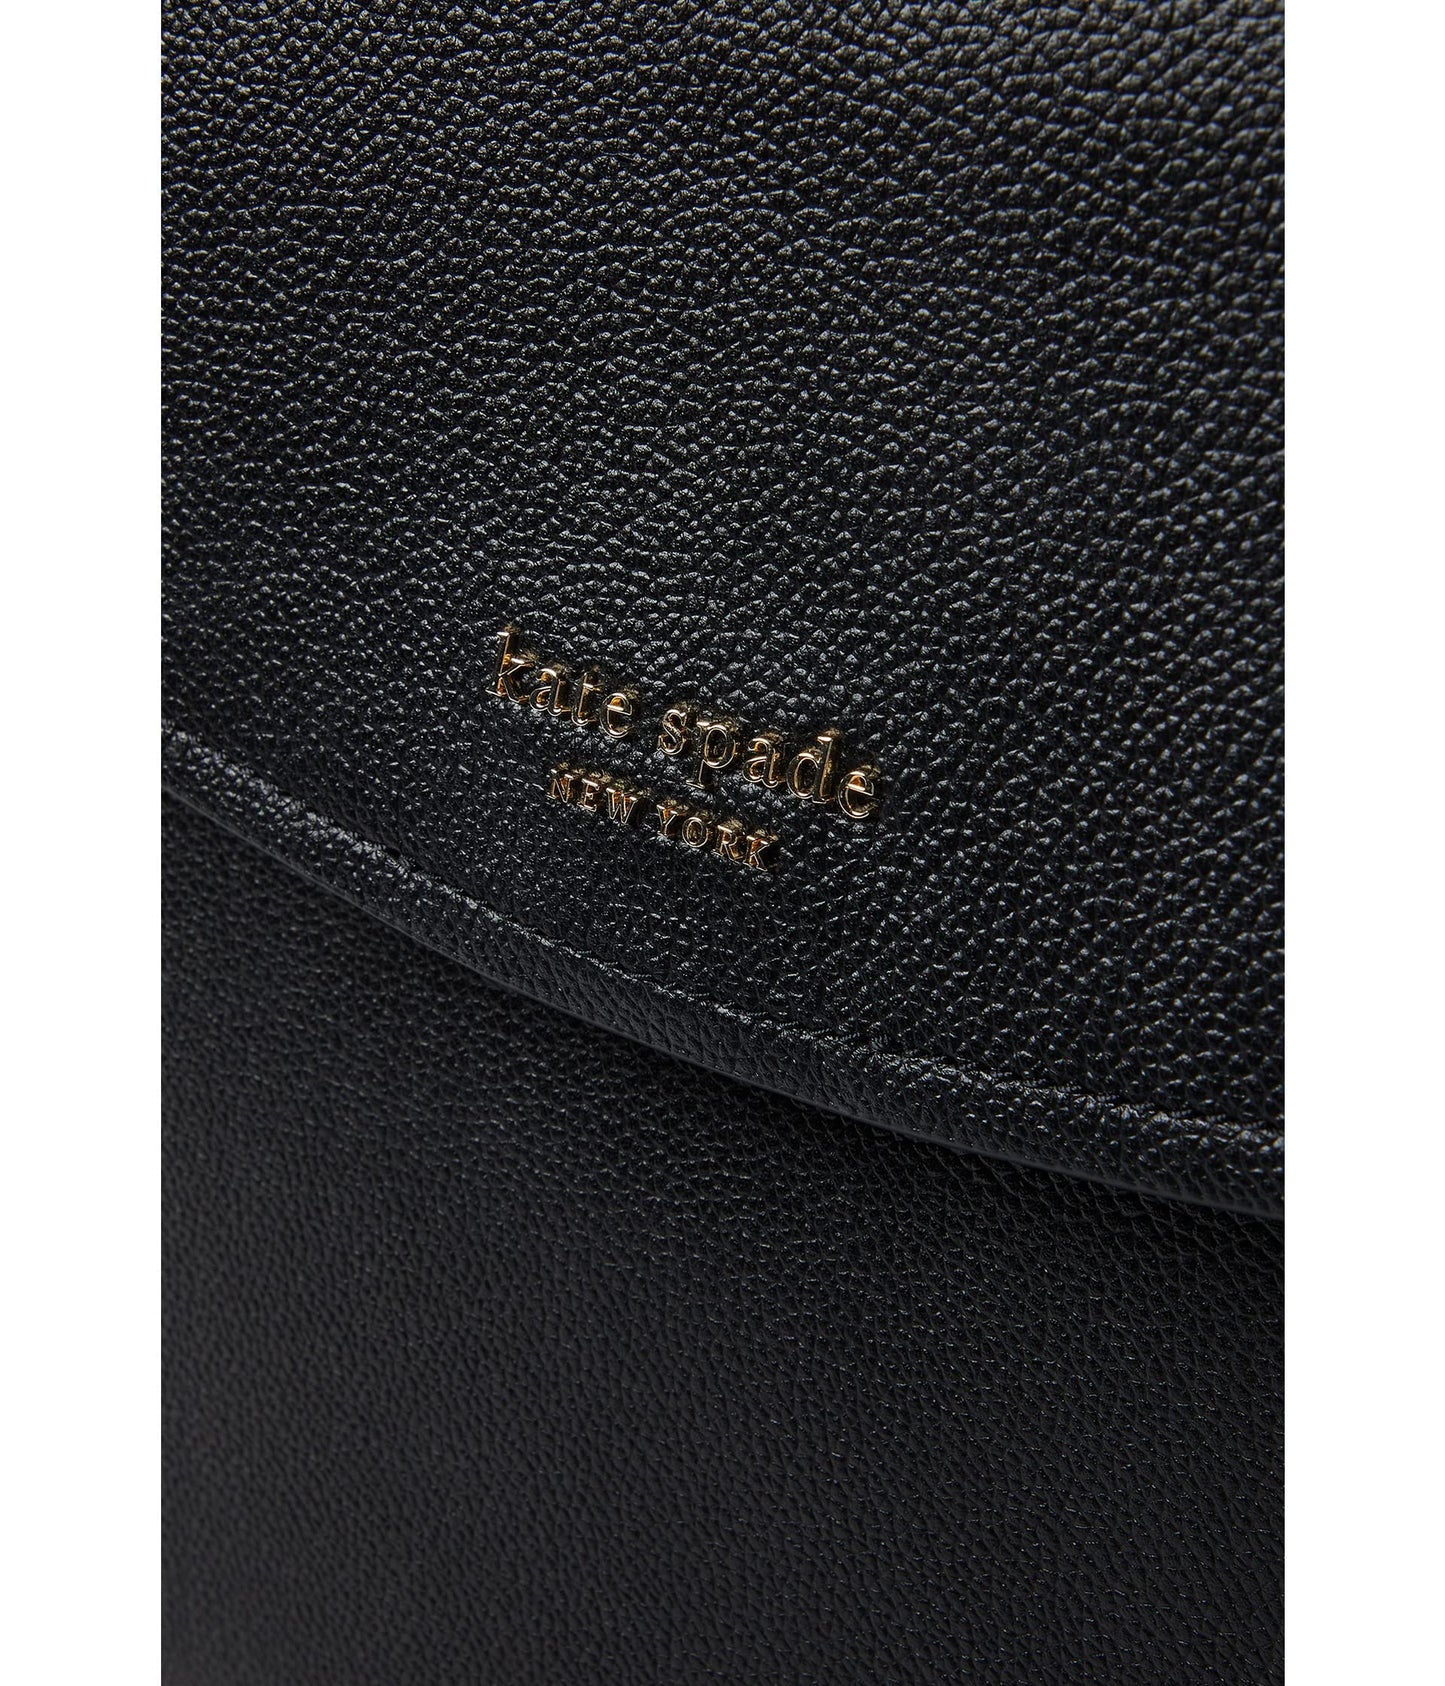 Kate Spade New York Thompson Pebbled Leather Medium Backpack